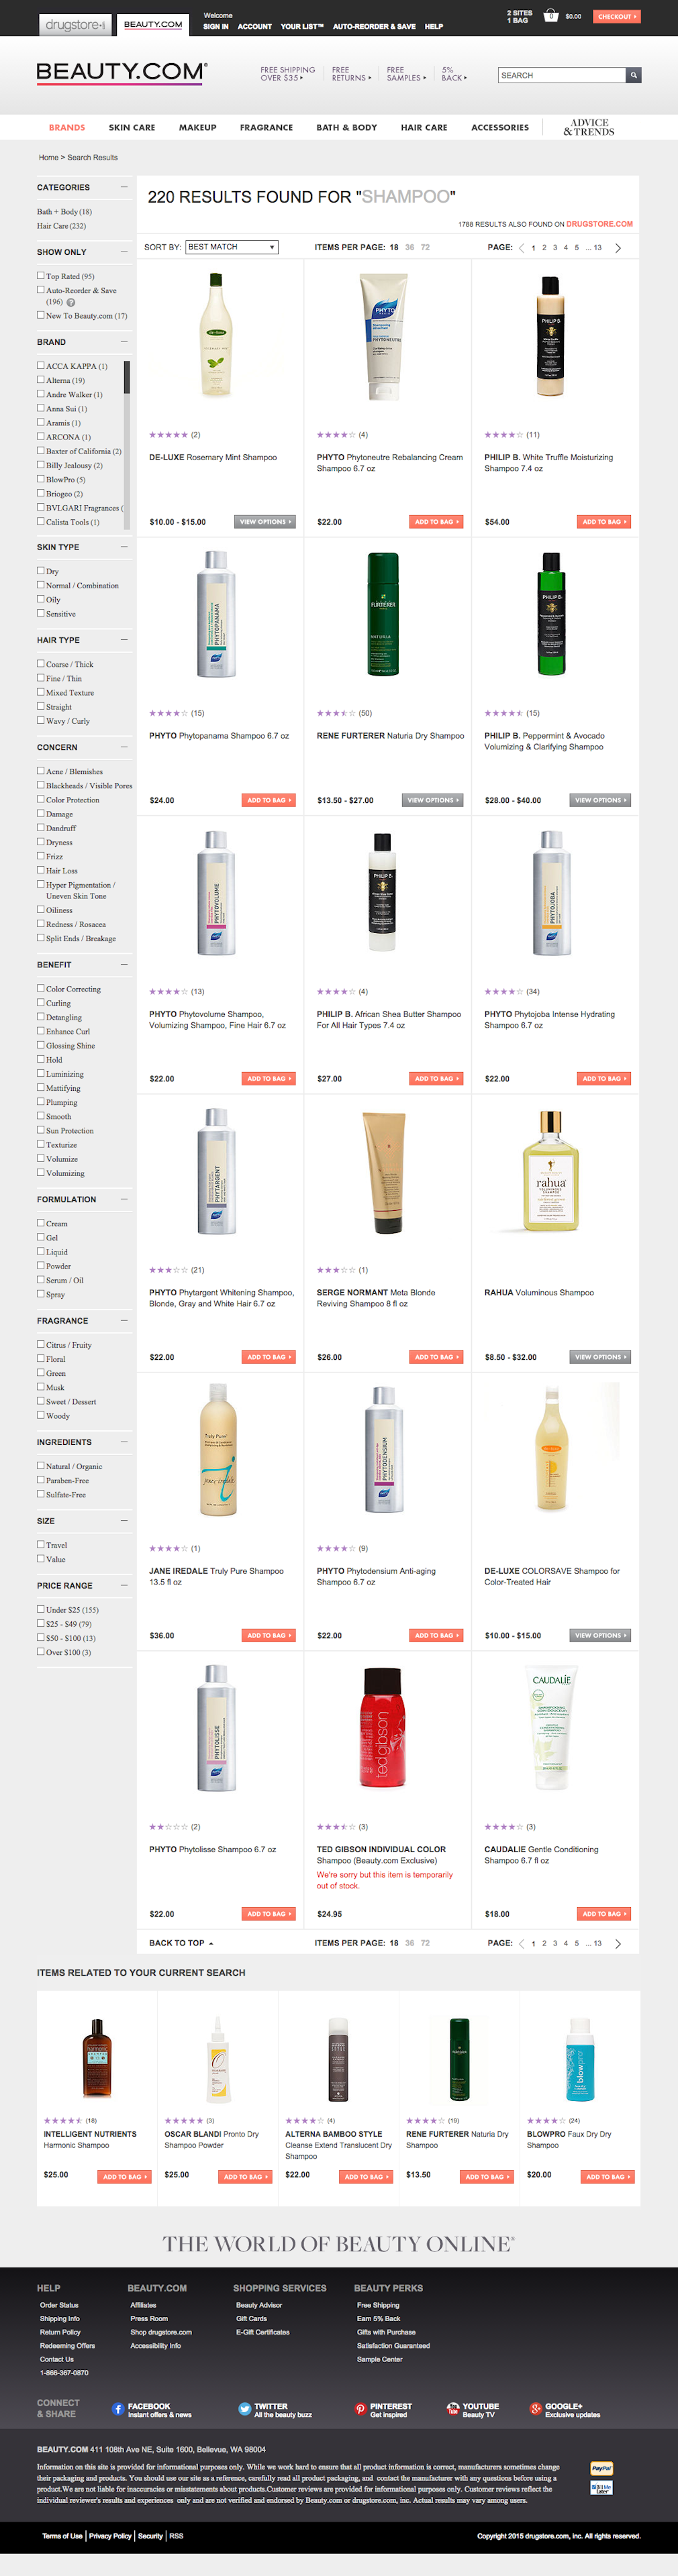 Ecommerce UX Battle: Benchmarking 4 Beauty & Cosmetics Mobile Websites